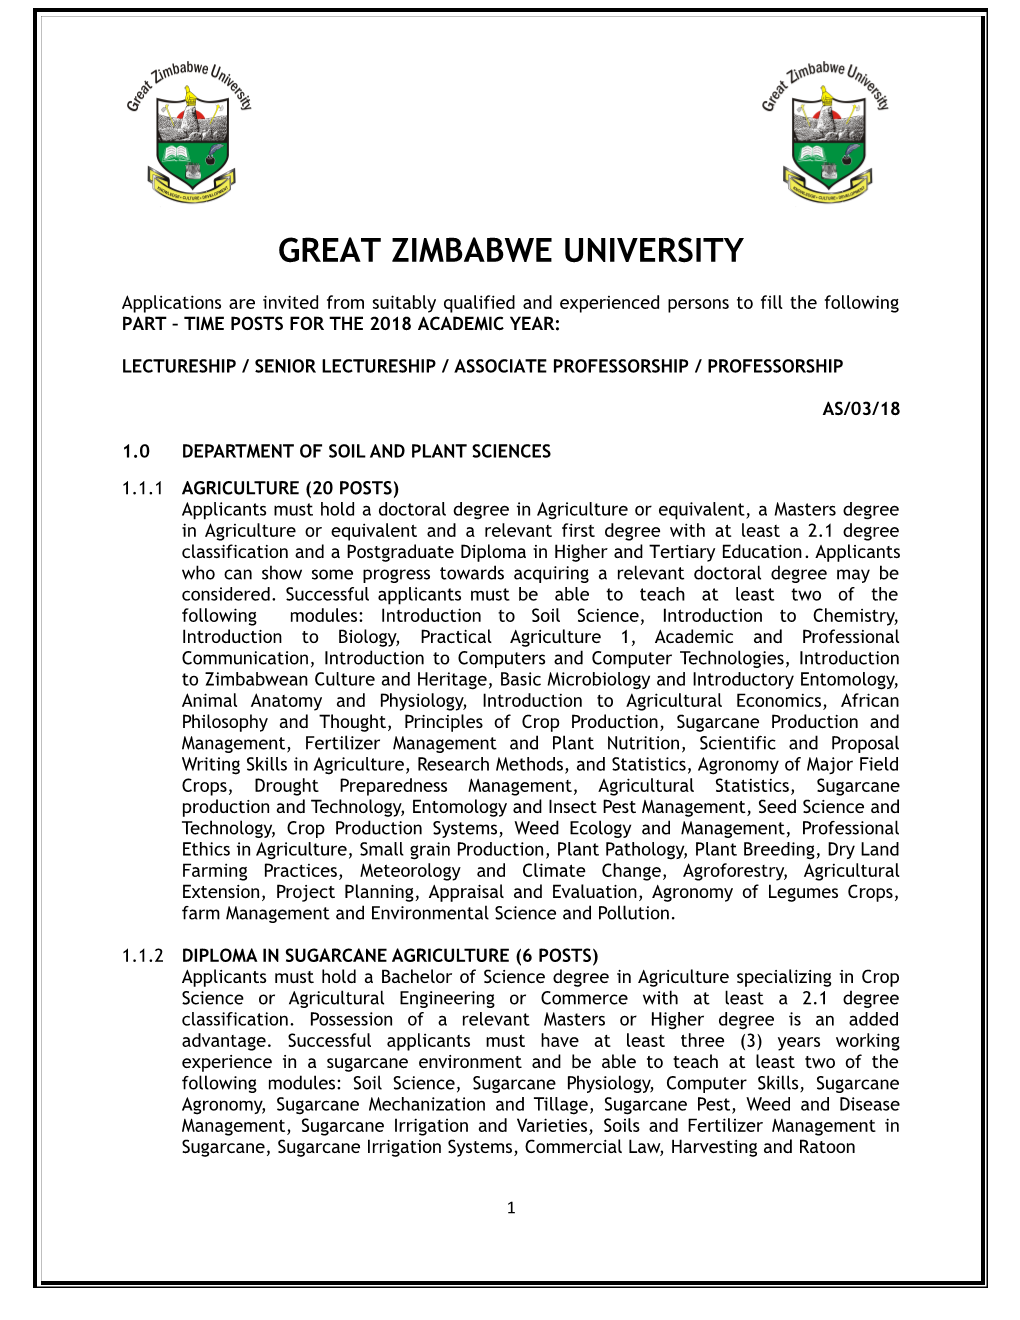 Great Zimbabwe University